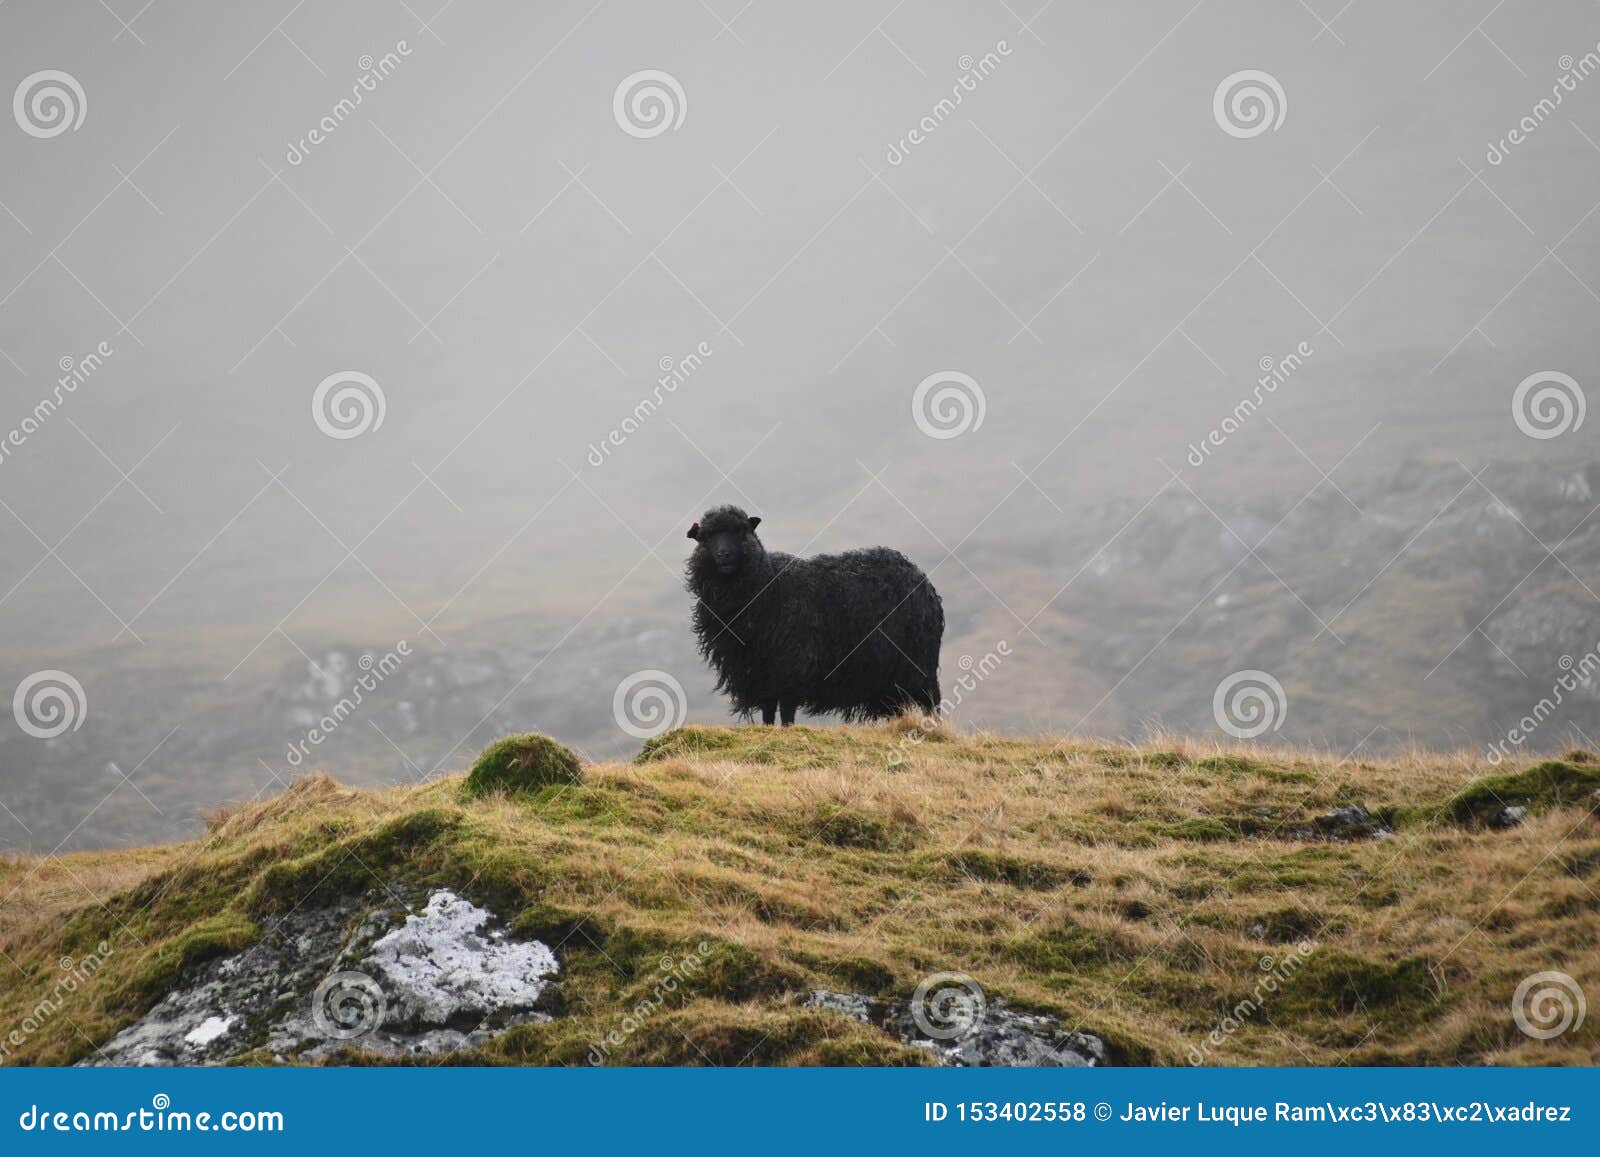 nordic sheep